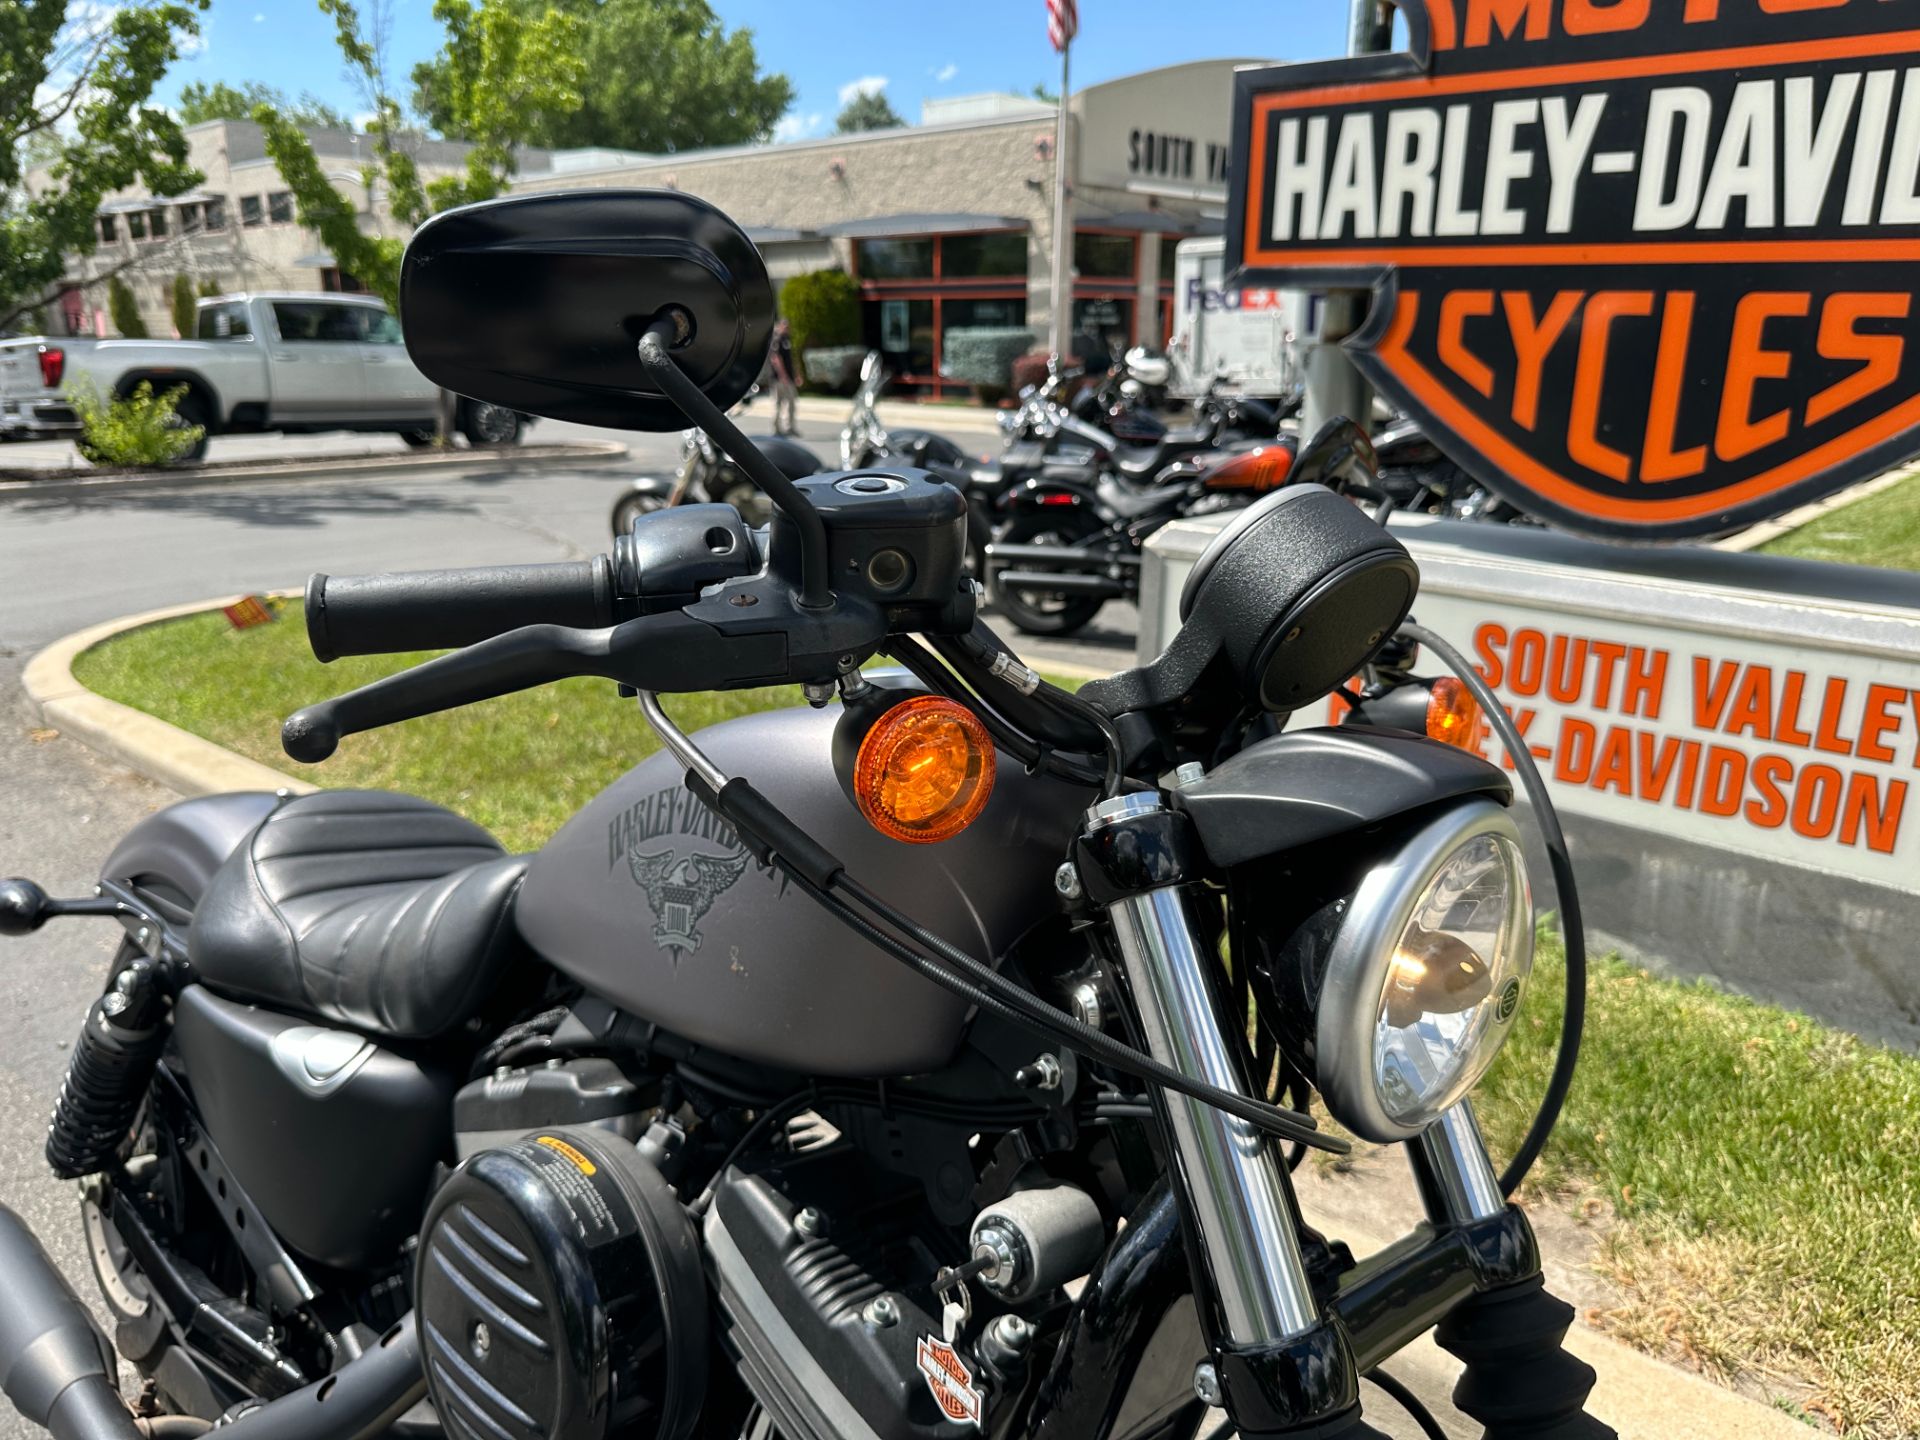 2017 Harley-Davidson Iron 883™ in Sandy, Utah - Photo 5